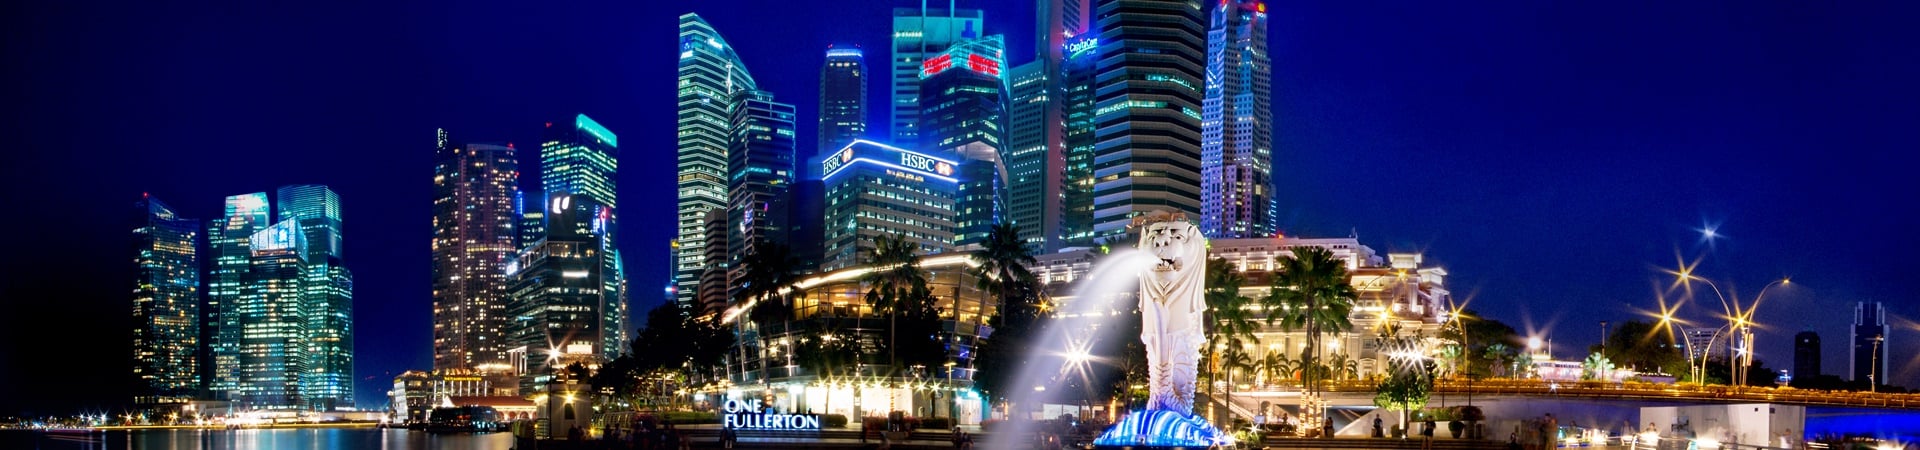 Image of Singapore City Stop